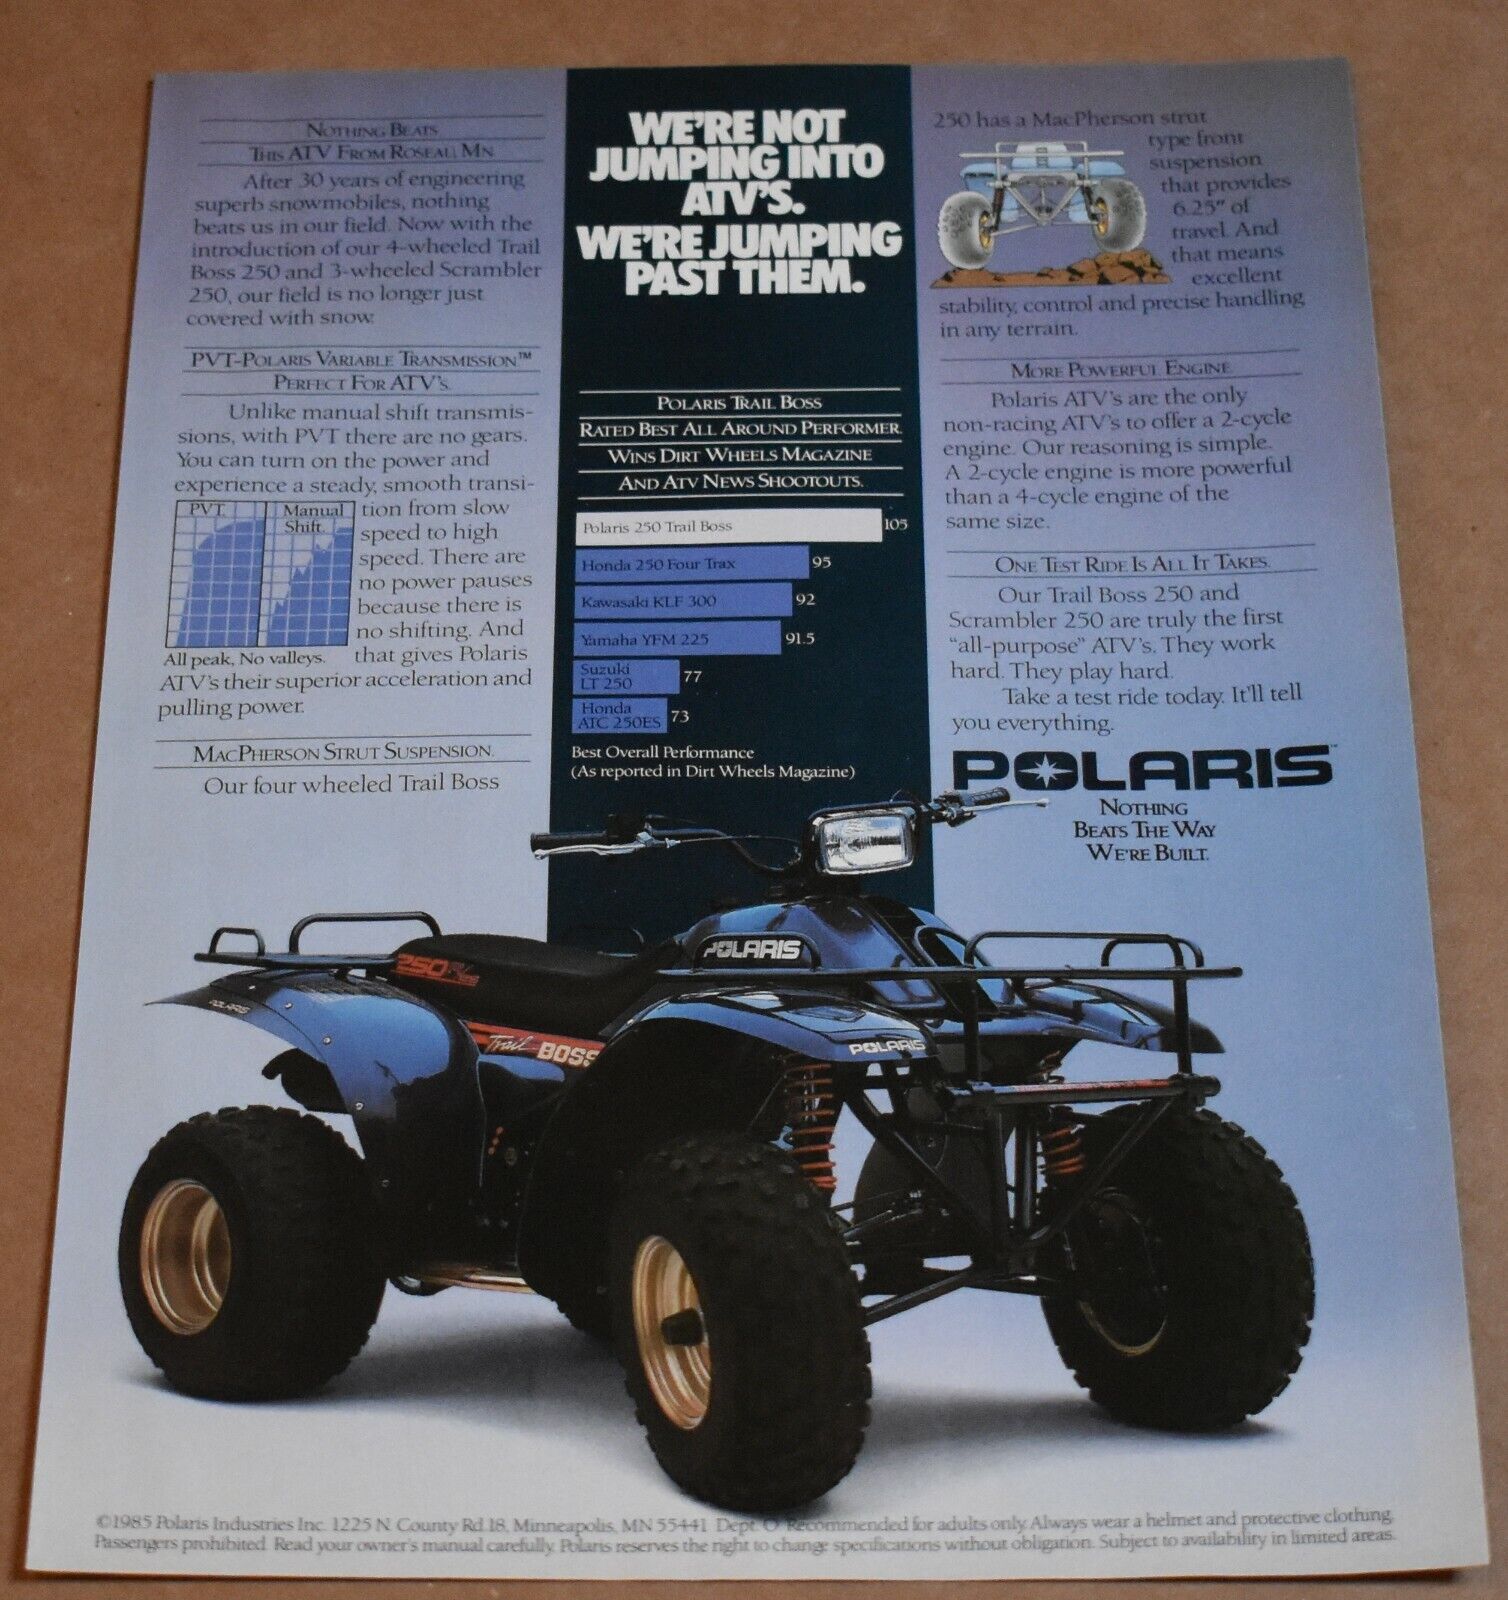 1985 Print Ad Polaris Nothing beats the way we're built four 4 wheeler ATV ride